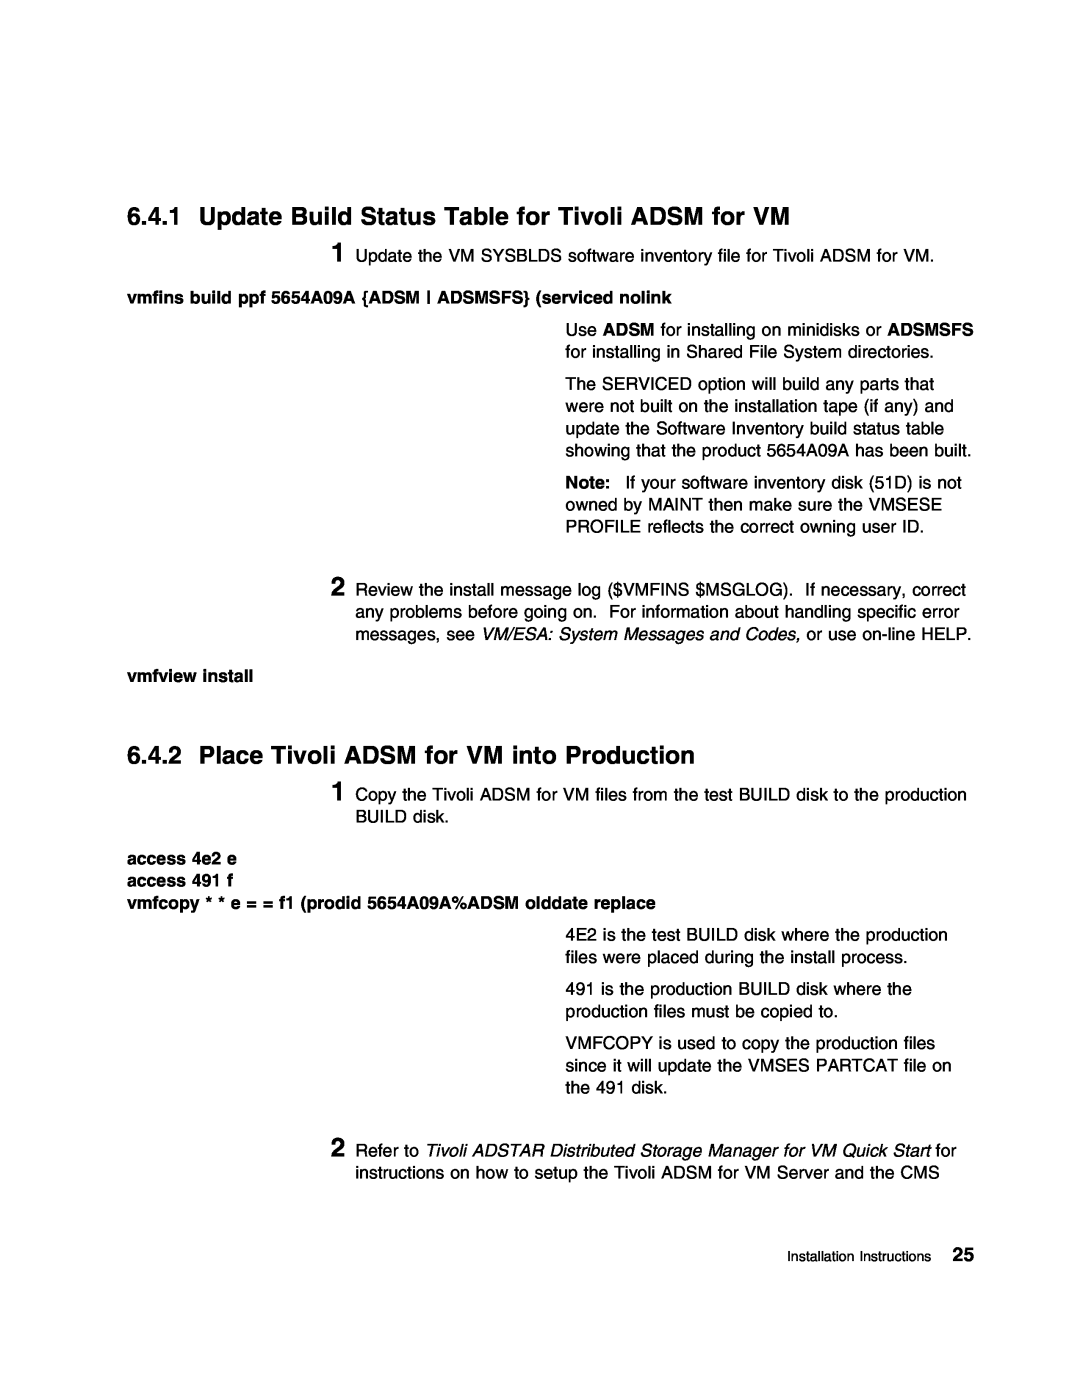 IBM 5697-VM3 Update Build Status Table for Tivoli ADSM for VM, Place Tivoli ADSM for VM into Production, vmfview install 